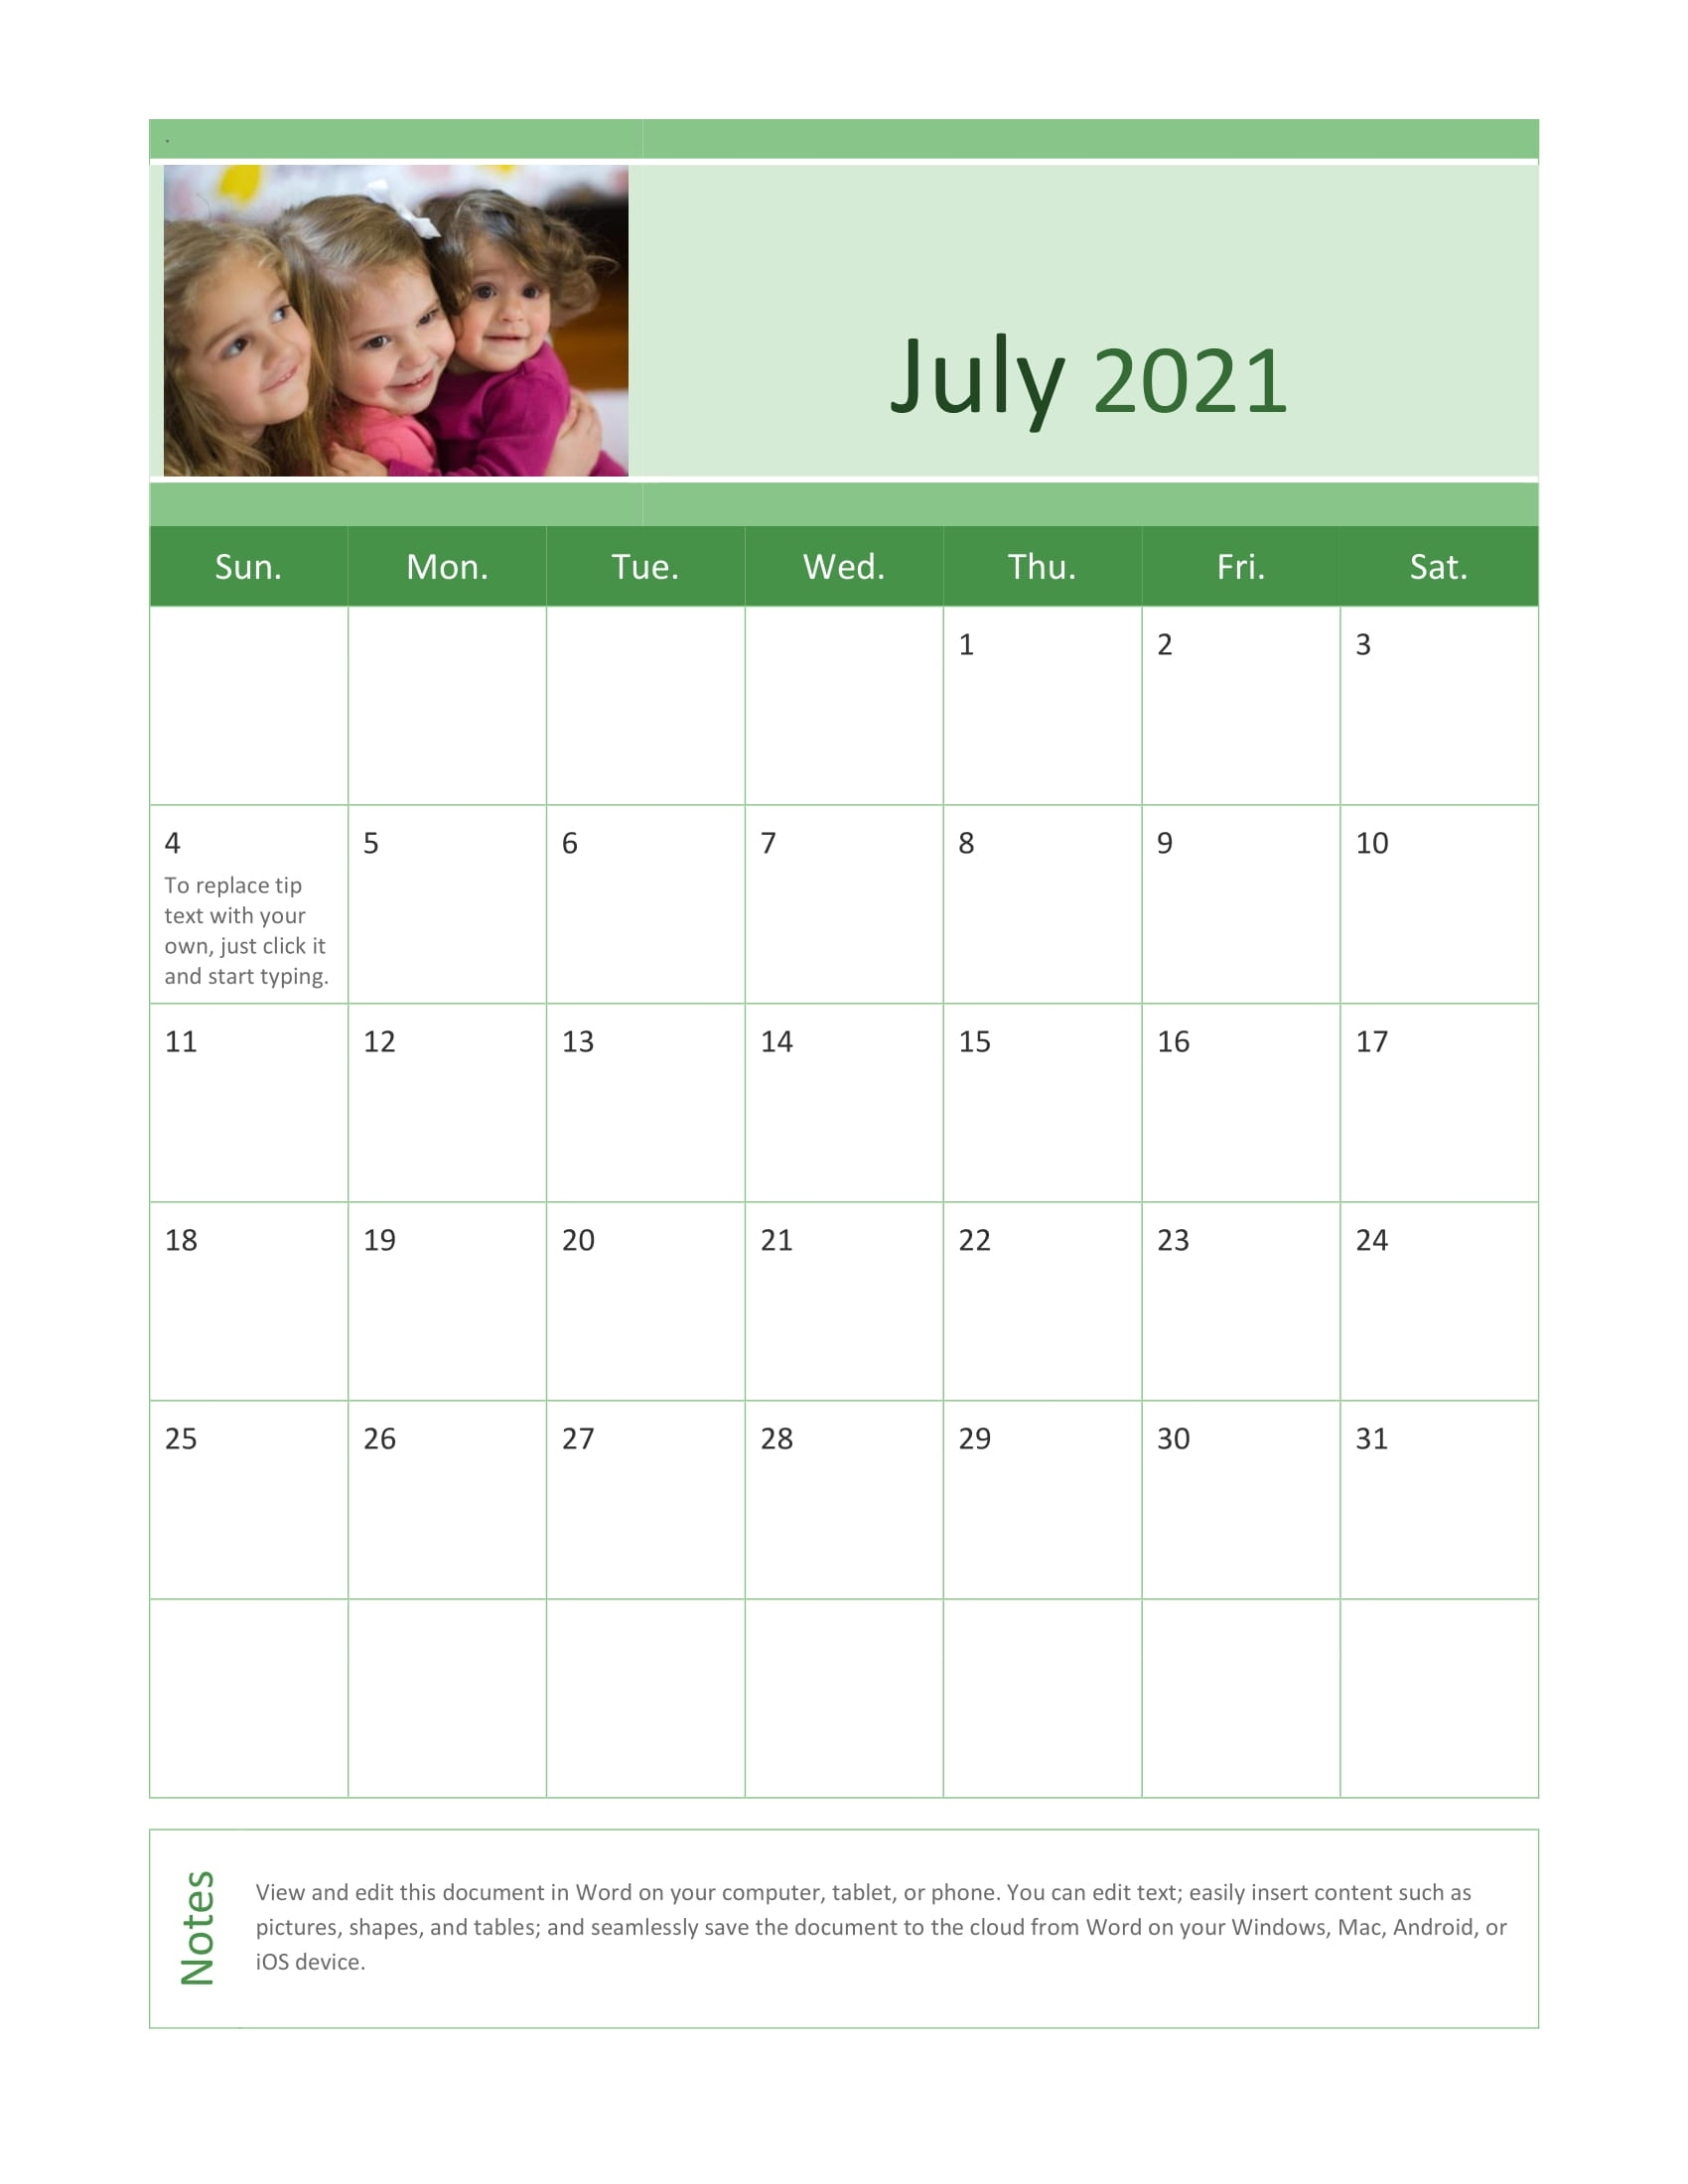 July 2021 Calendar Printable - Printable Calendar Template 2020 2021 July 2020 - December 2021 Calendar